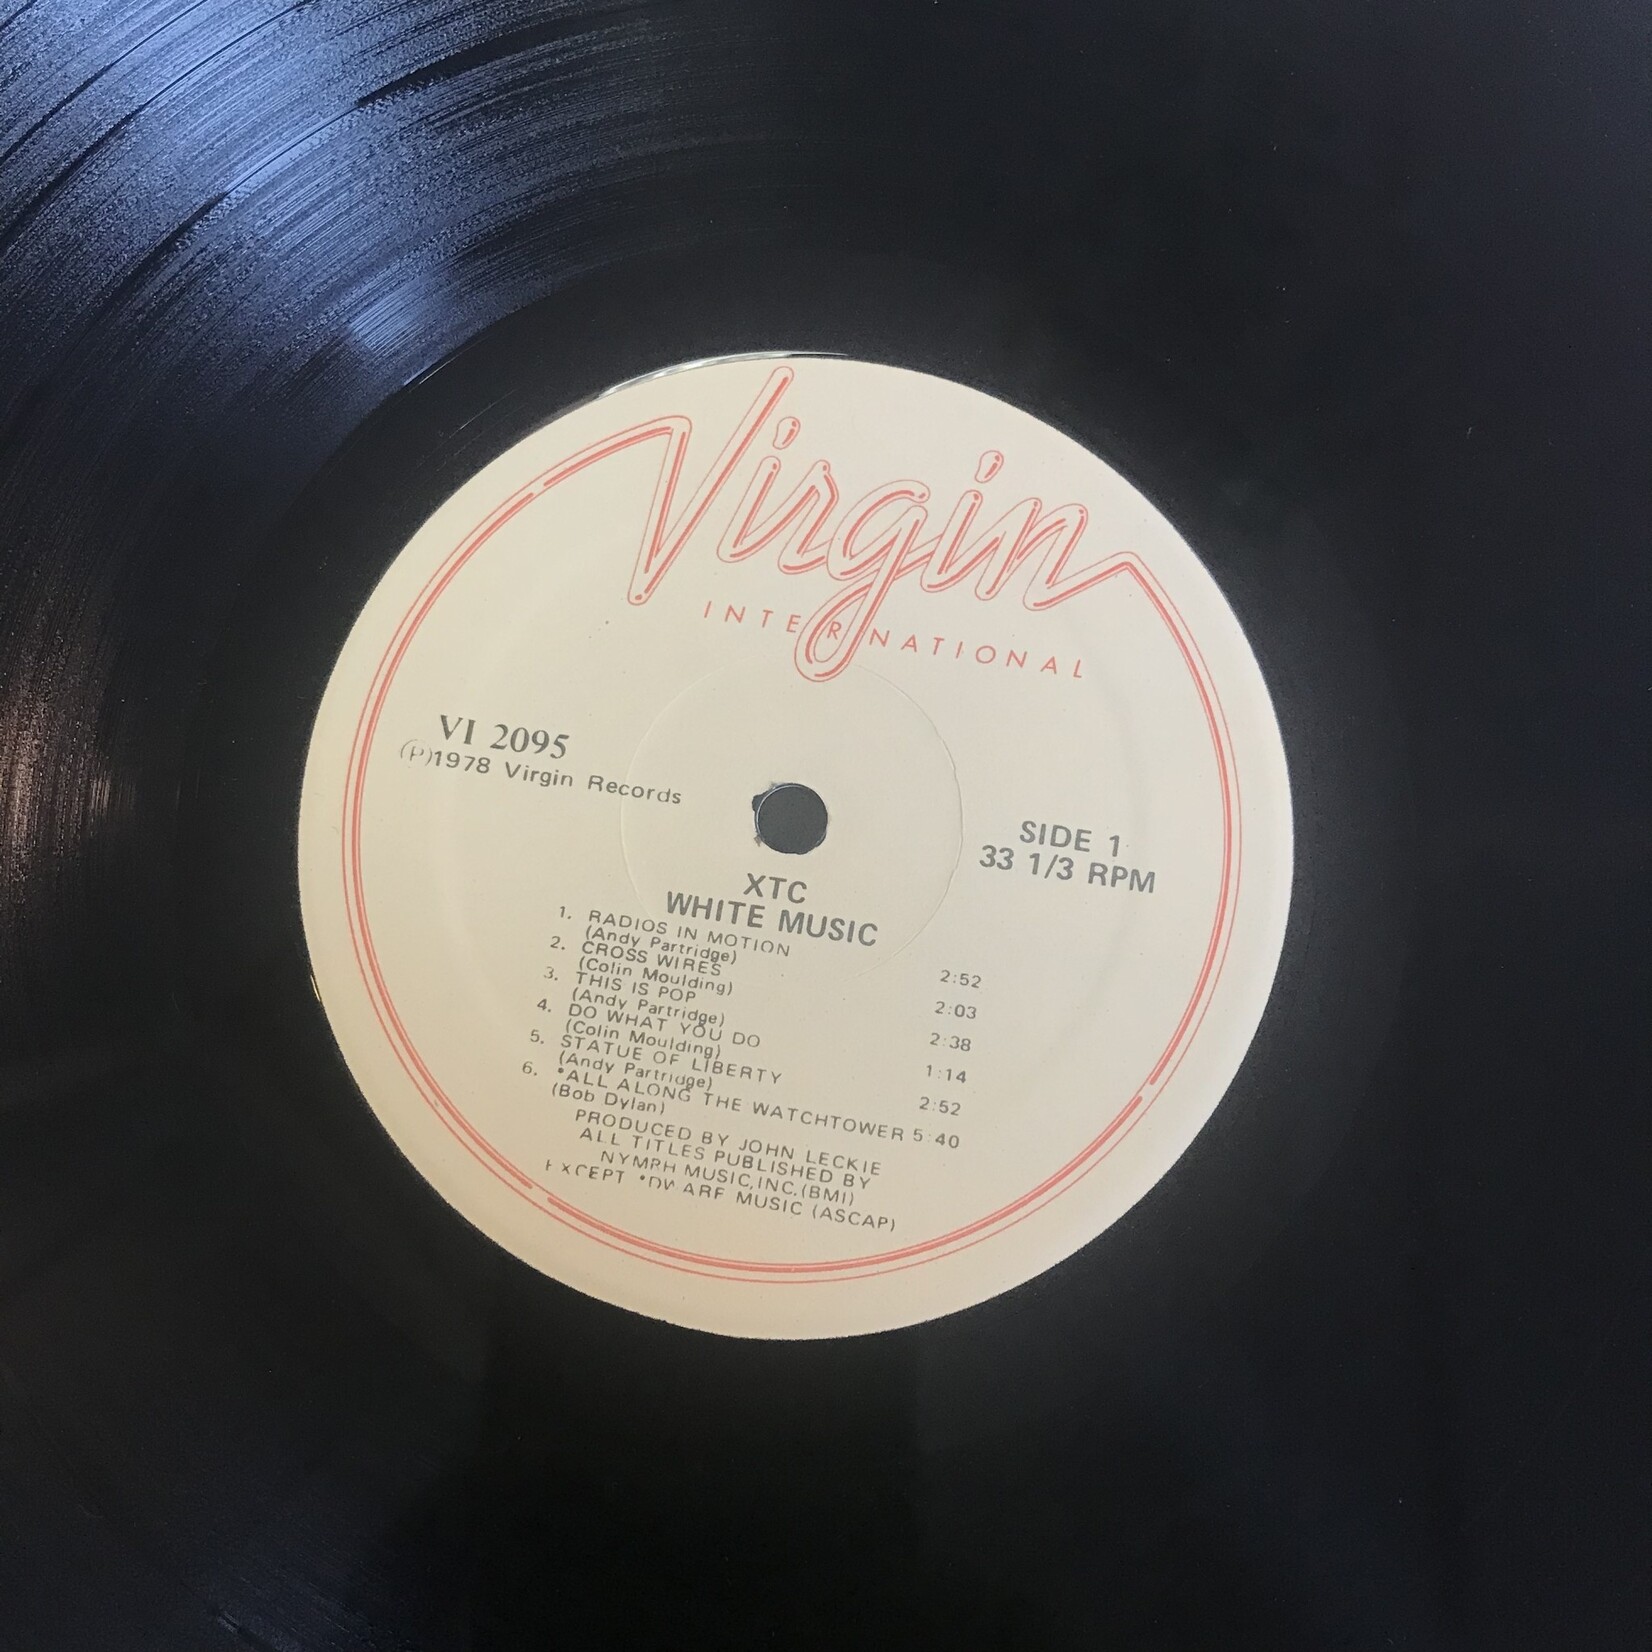 XTC - White Music - VI 2095 - Vinyl LP (USED)